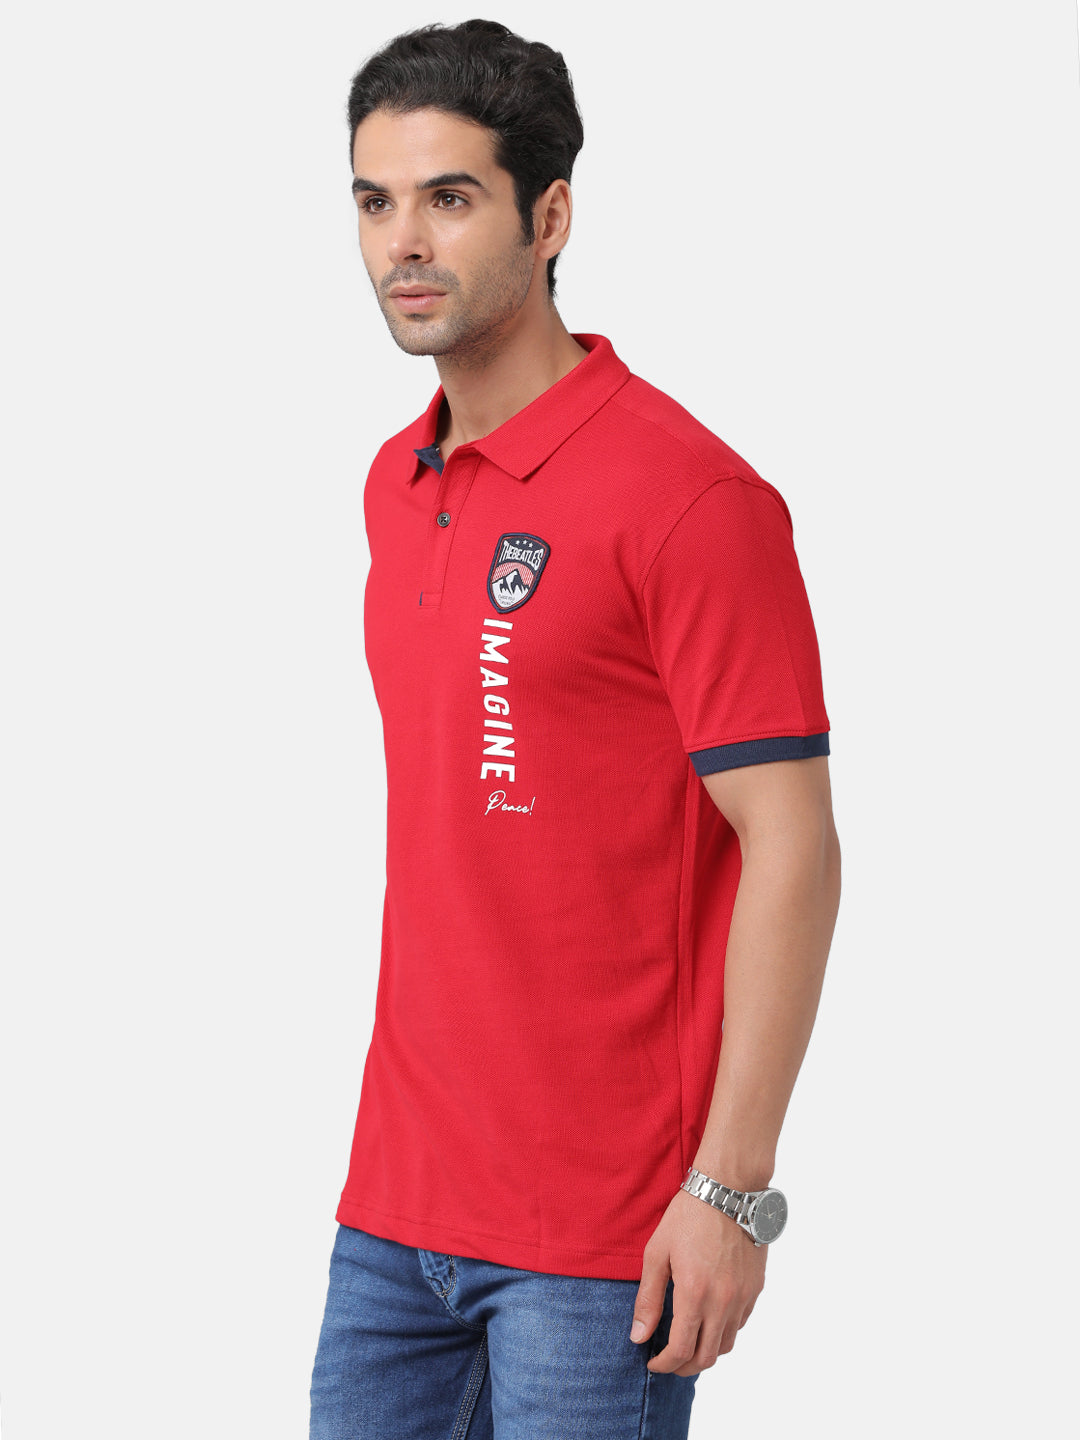 Classic Polo Mens Cotton Chest Print Slim Fit Polo Neck Red Color T-Shirt | Prm 686a